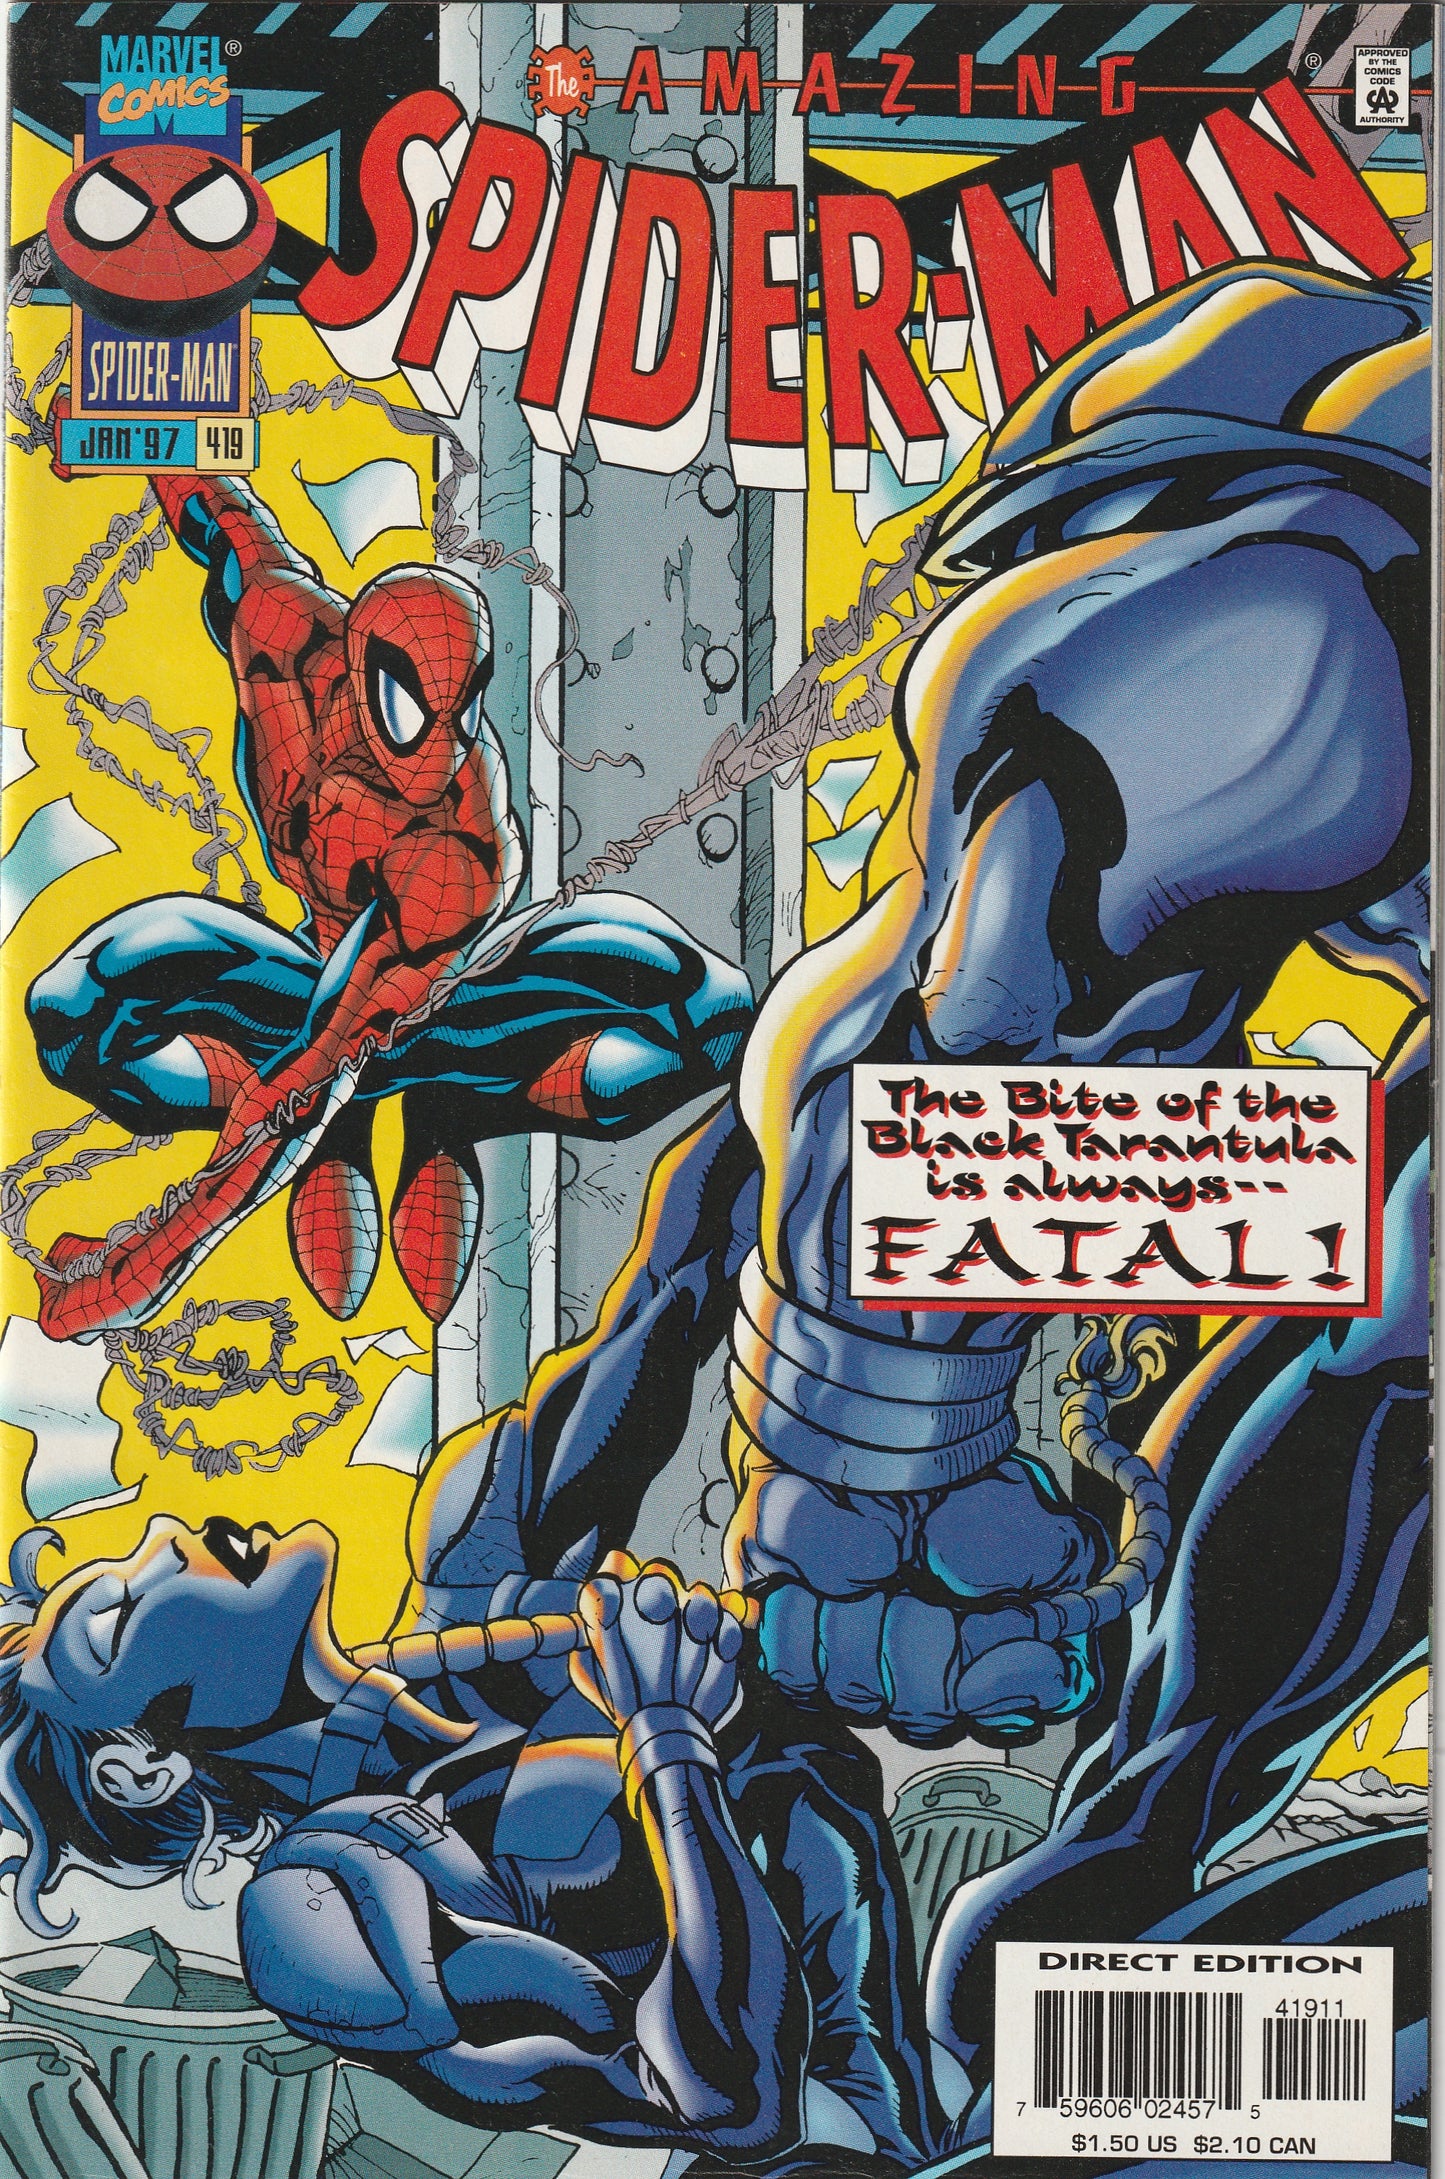 Amazing Spider-Man #419 (1997) - Black Tarantula Appearance